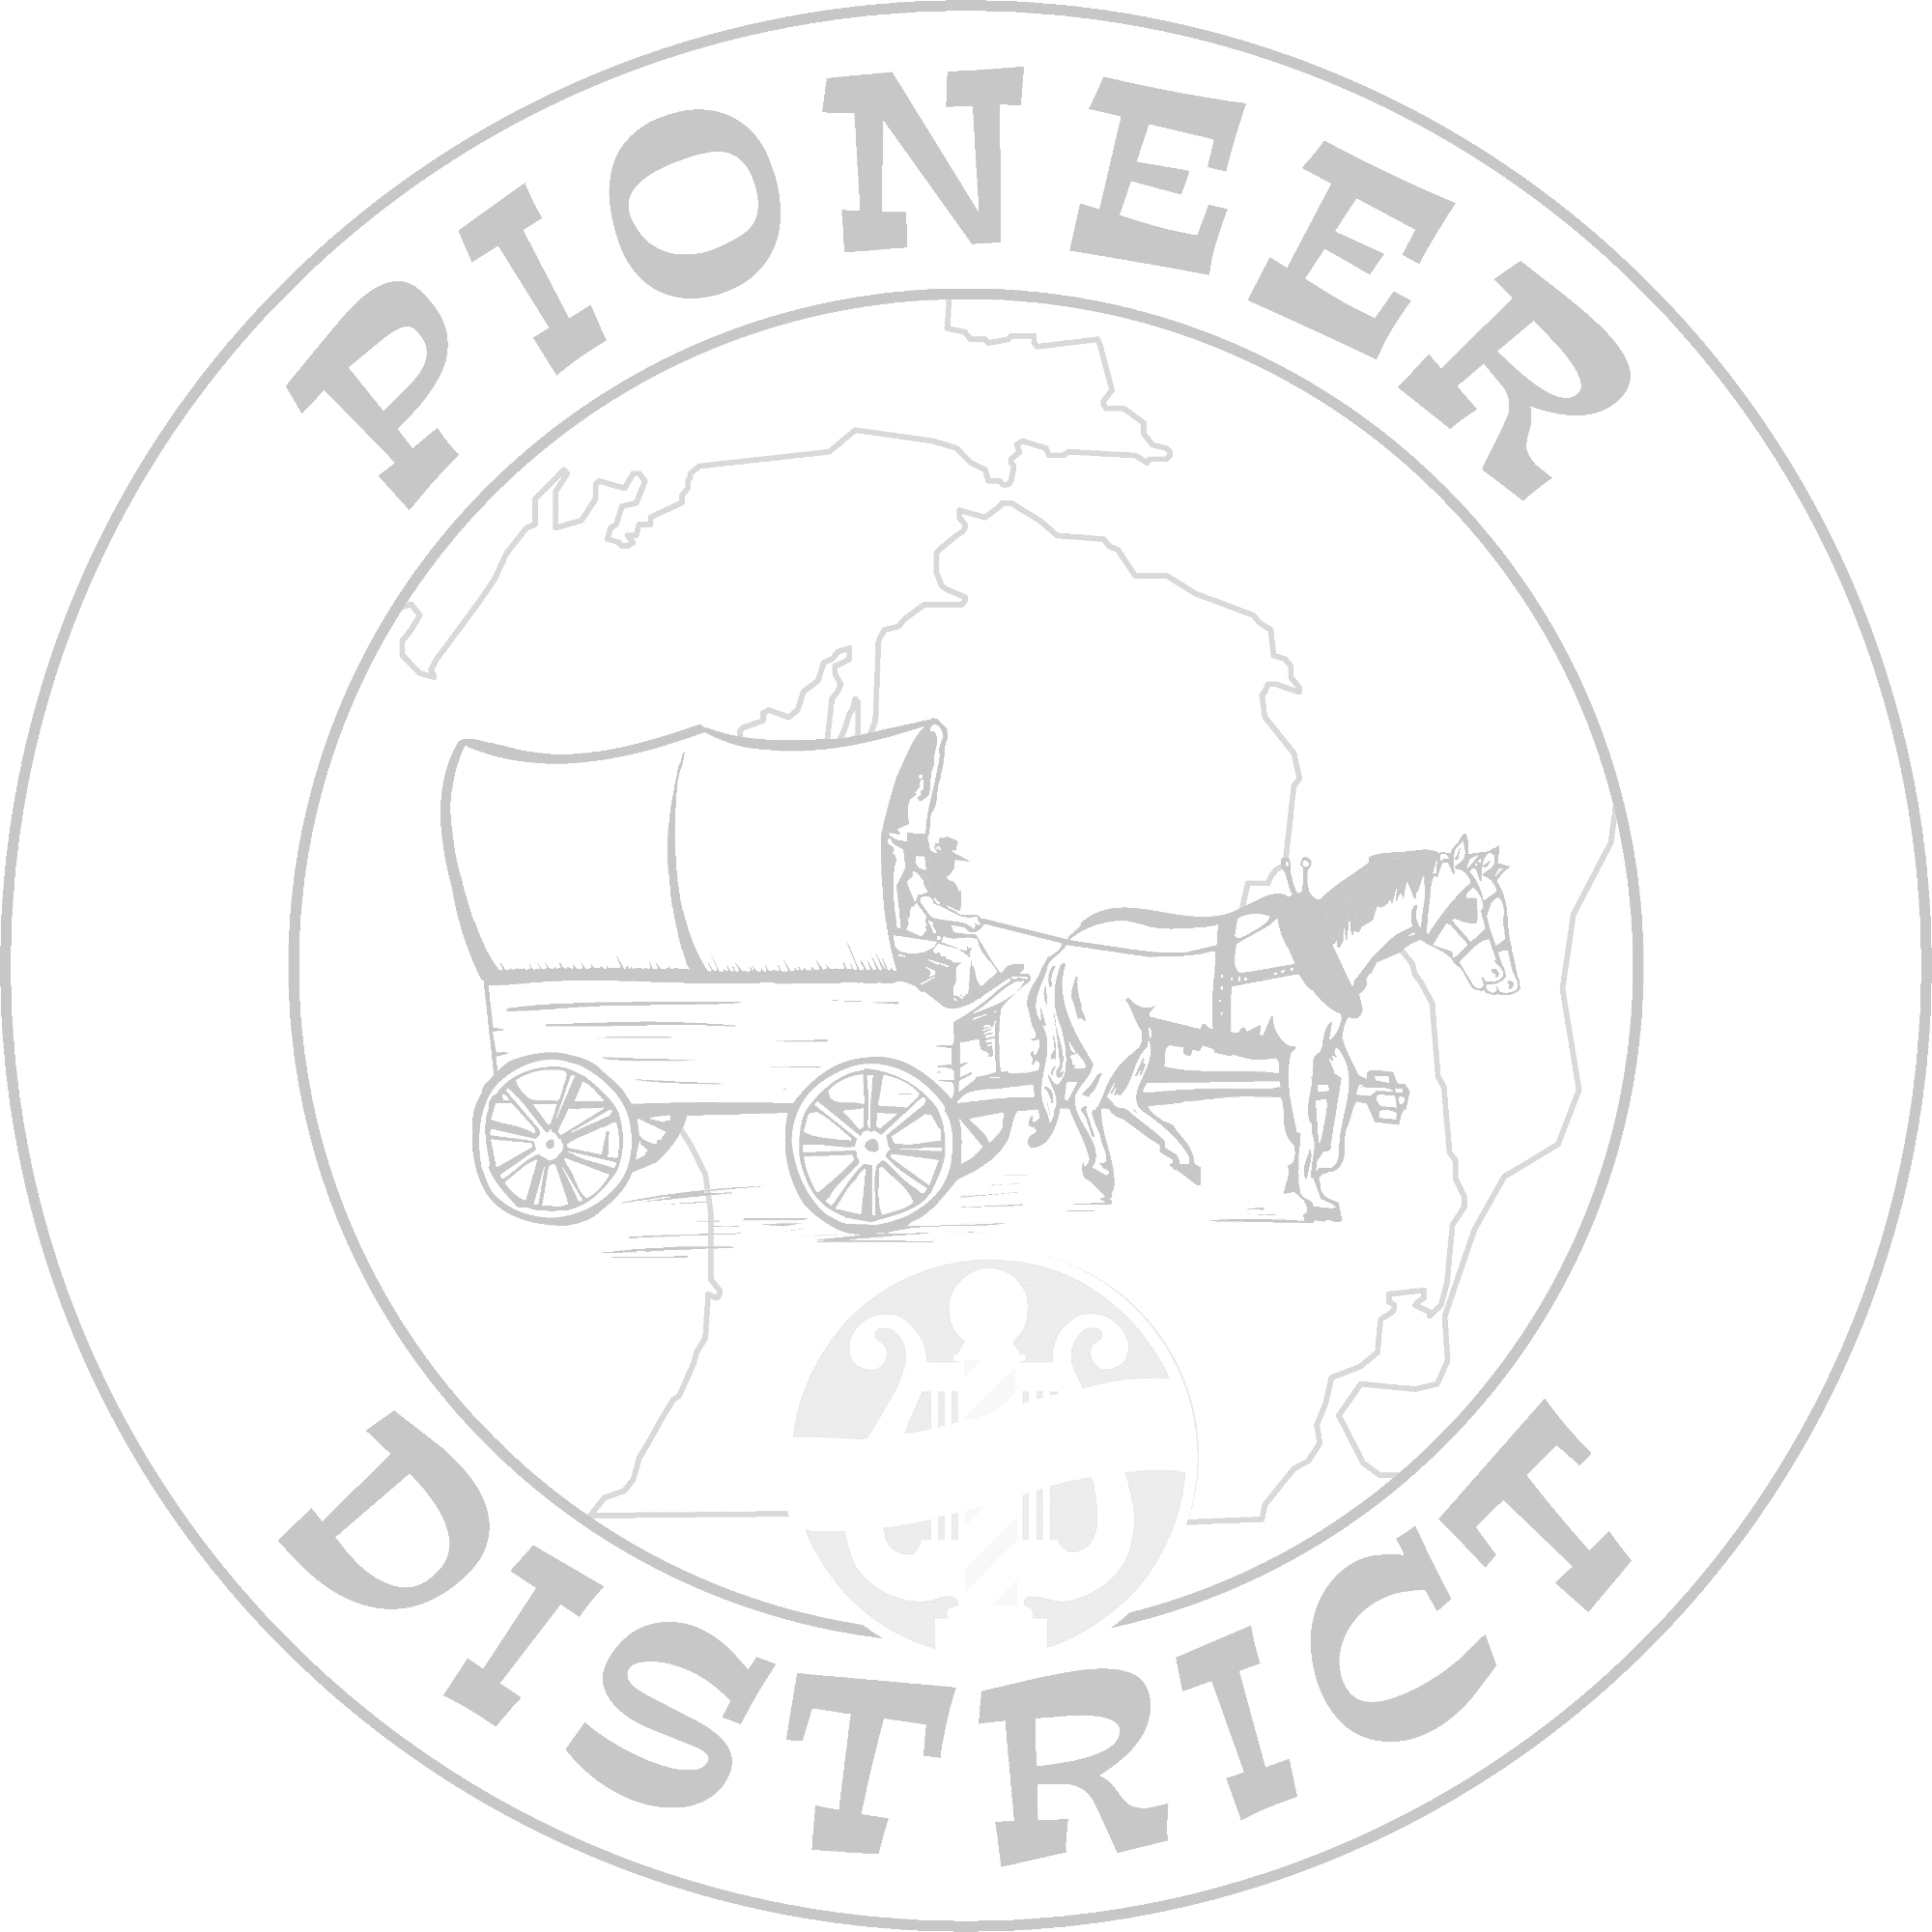 Pioneer Logo 5 x 5 bw faded.jpg - 515484 Bytes